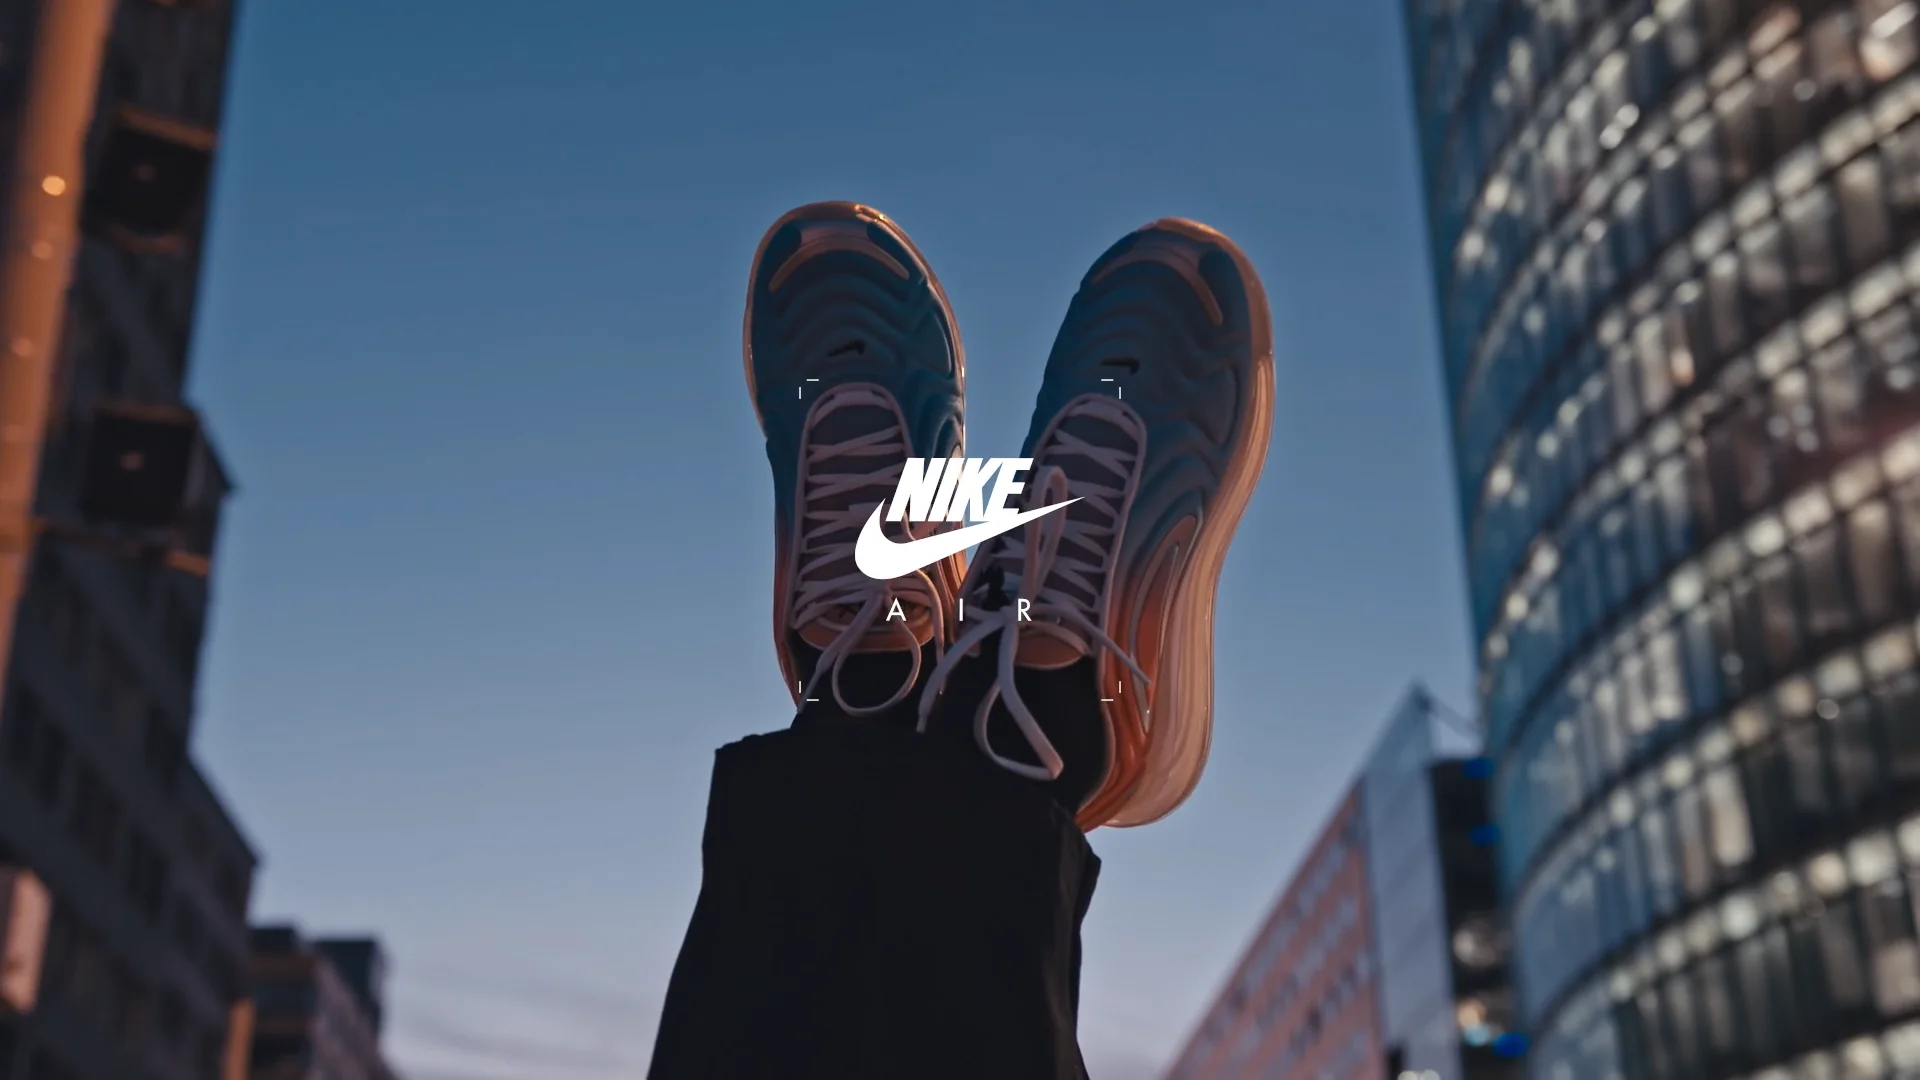 Nike - Going Bigger (Dir. cut) on Vimeo